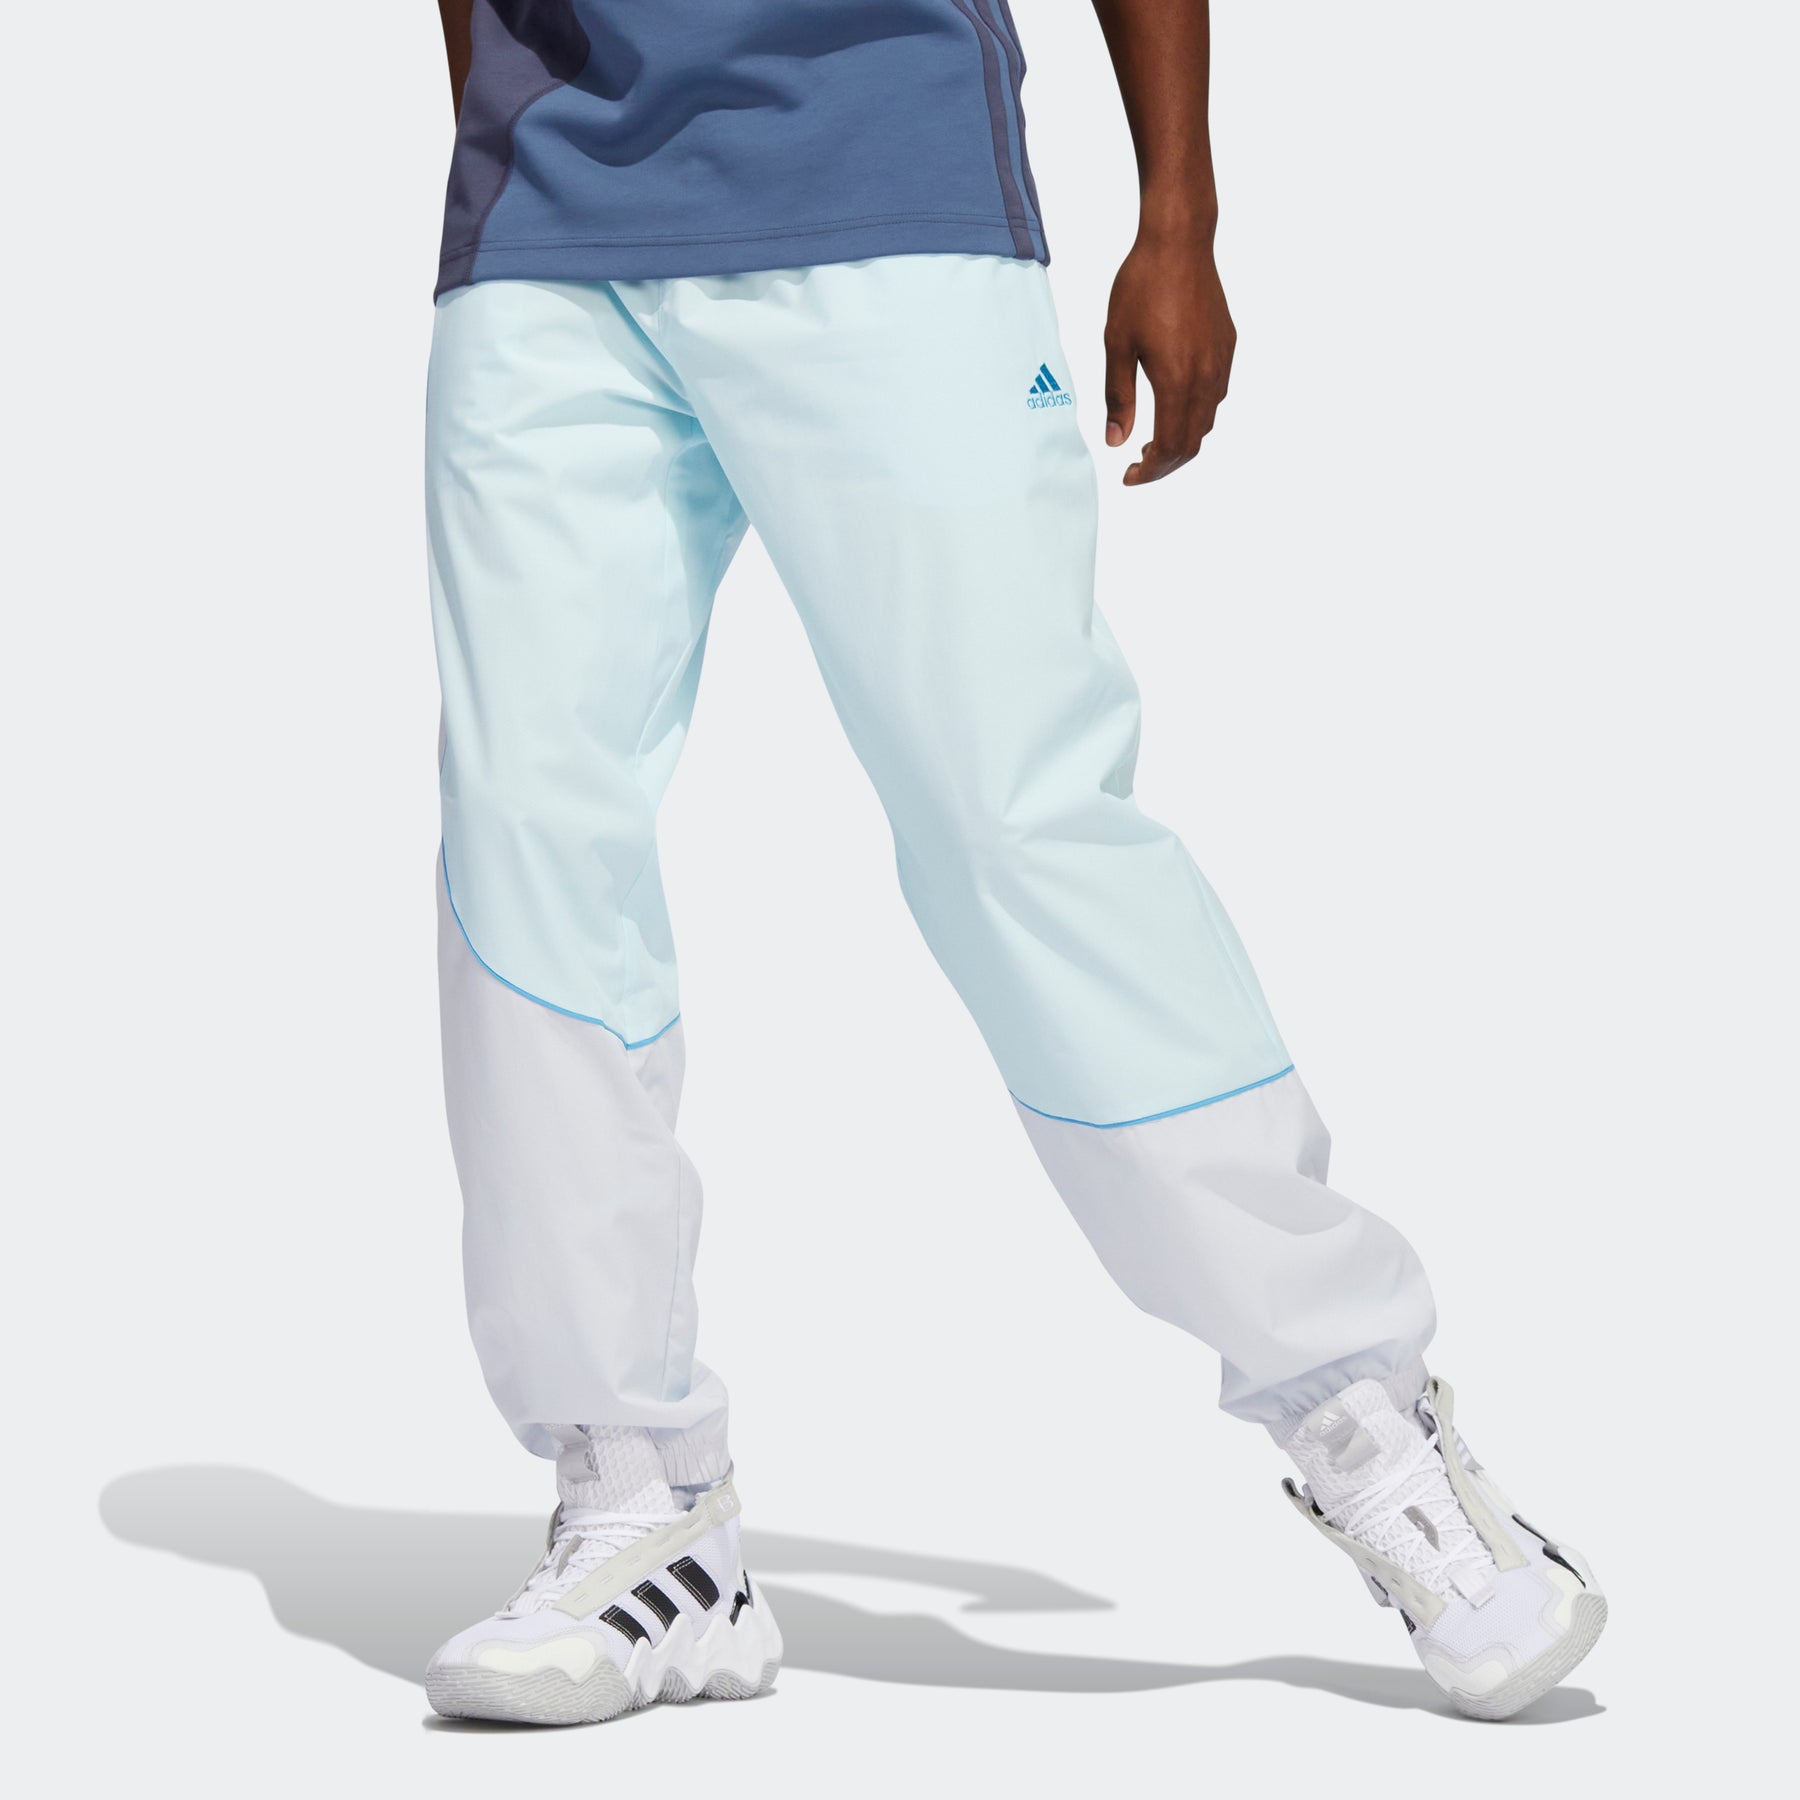 adidas Men's Trae Ripstop Pants (Almost Blue/Dash Grey) $23 + Free Shipping